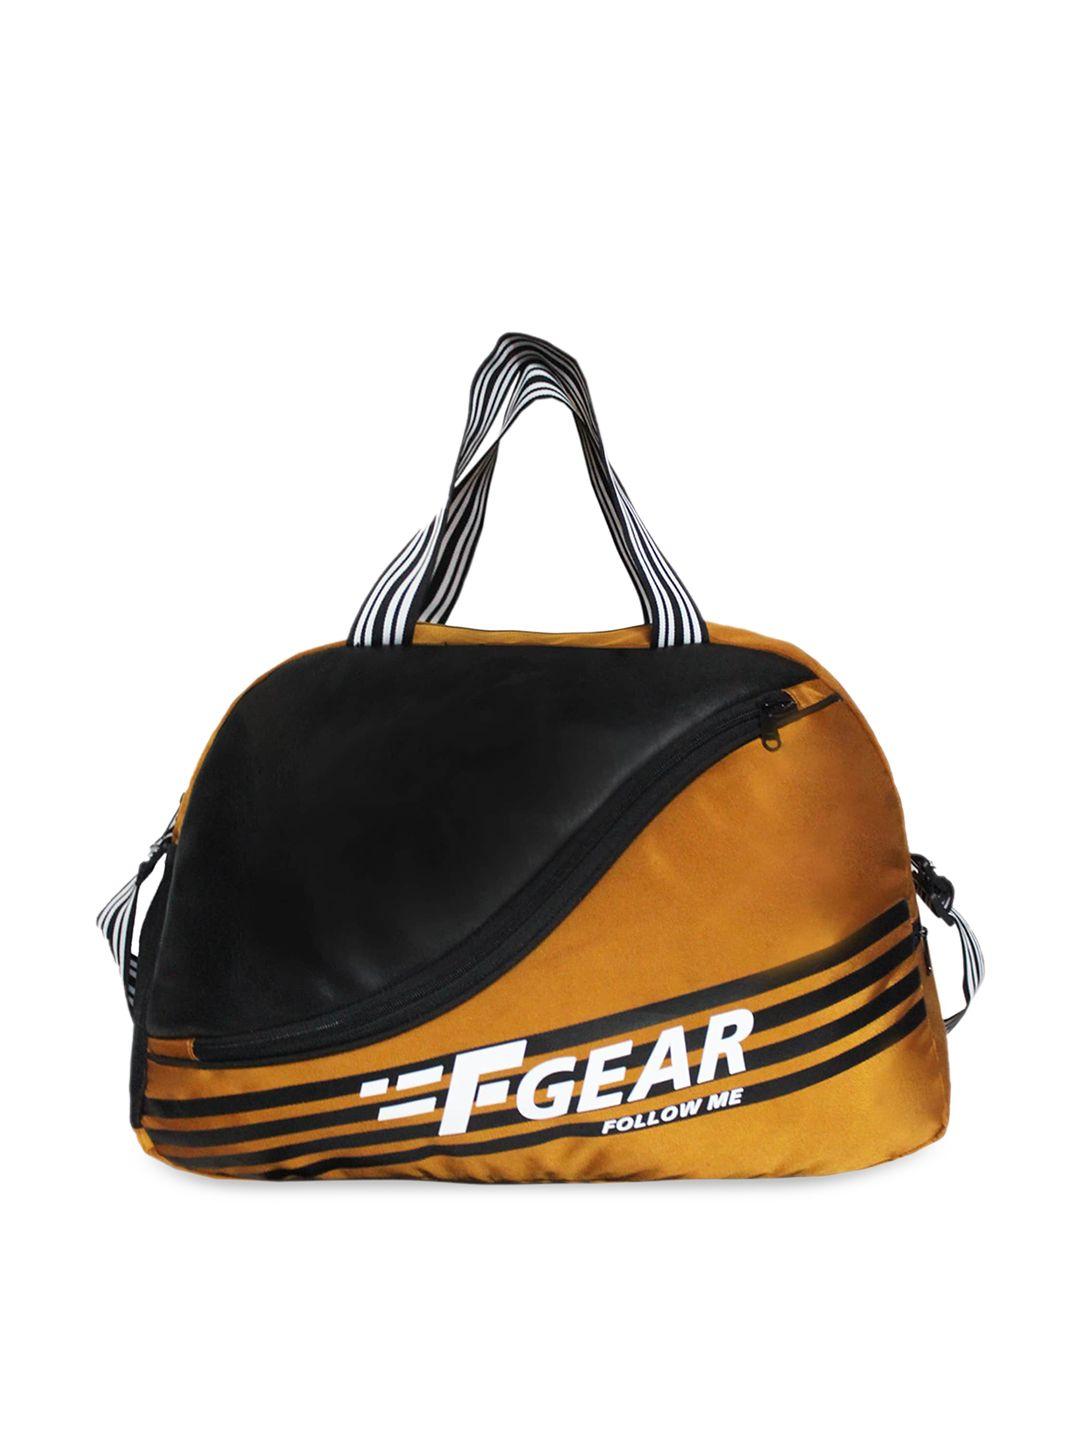 f gear black & gold colourblocked duffle bag